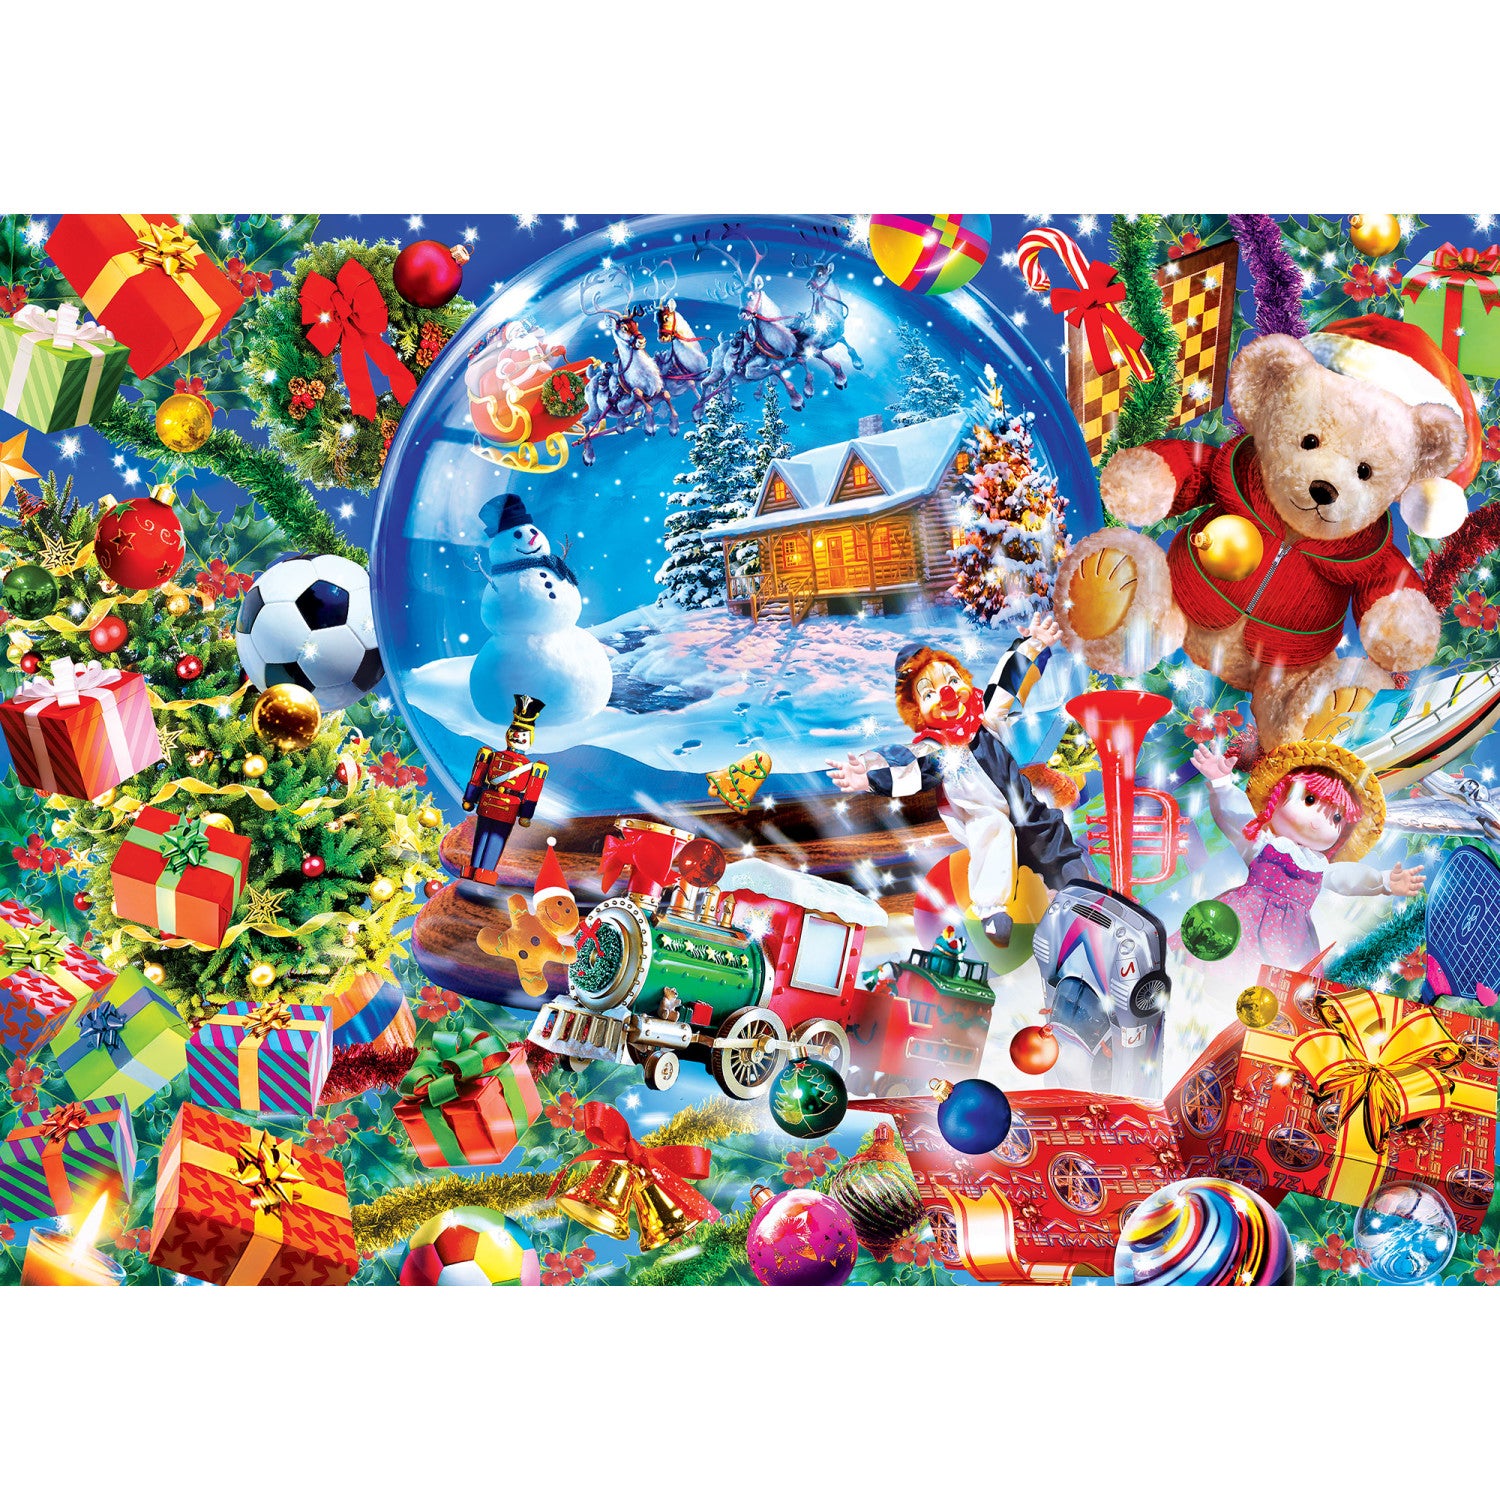 Holiday Glitter - Snow Globe Dreams 500 Piece Puzzle